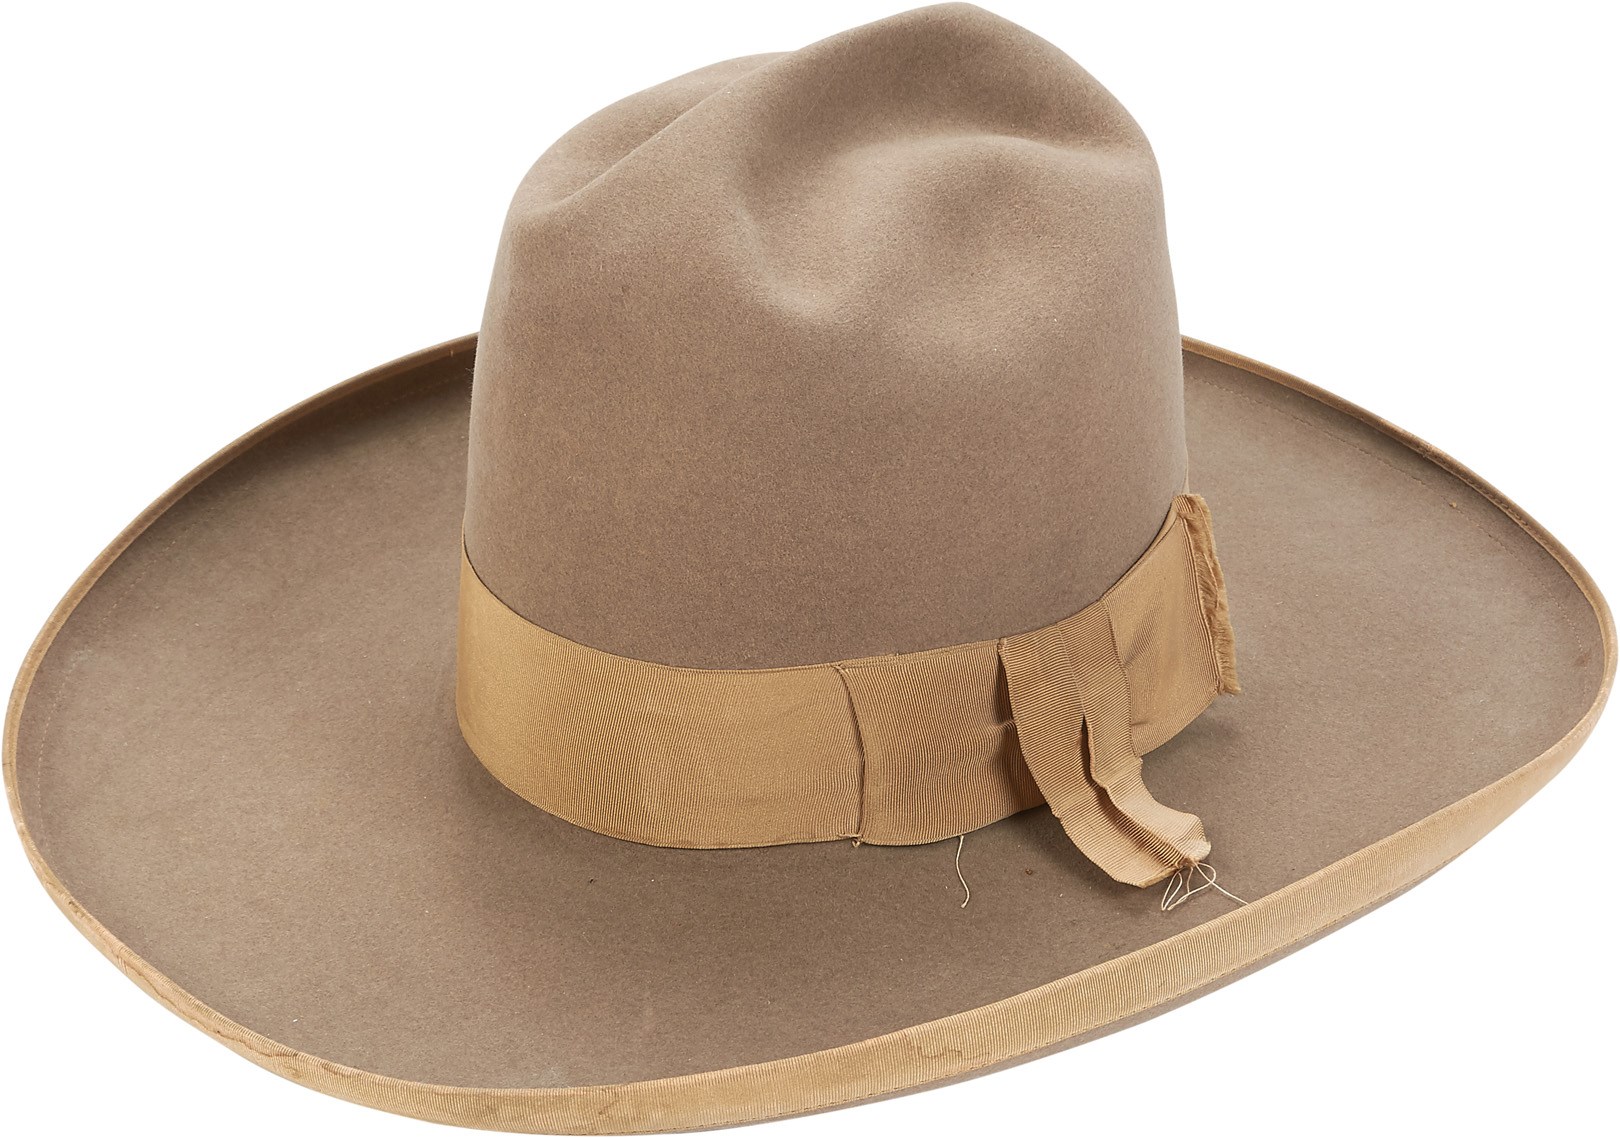 - Buck Jones Screen Worn Cowboy Hat